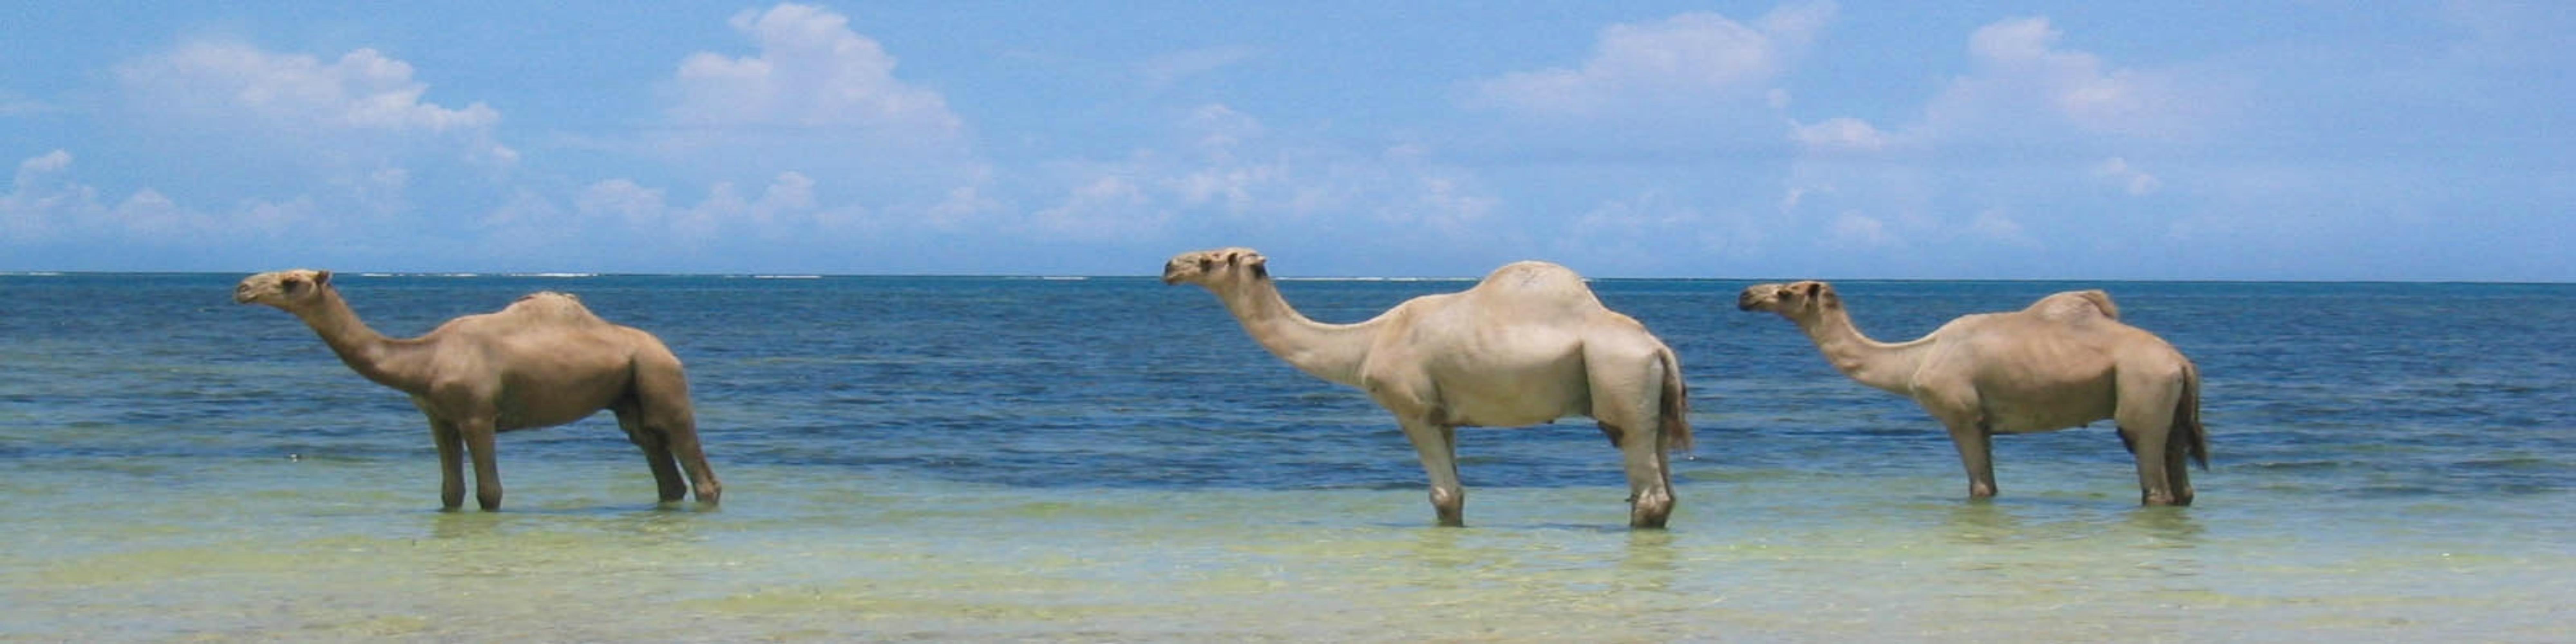 camel (Copy).jpg